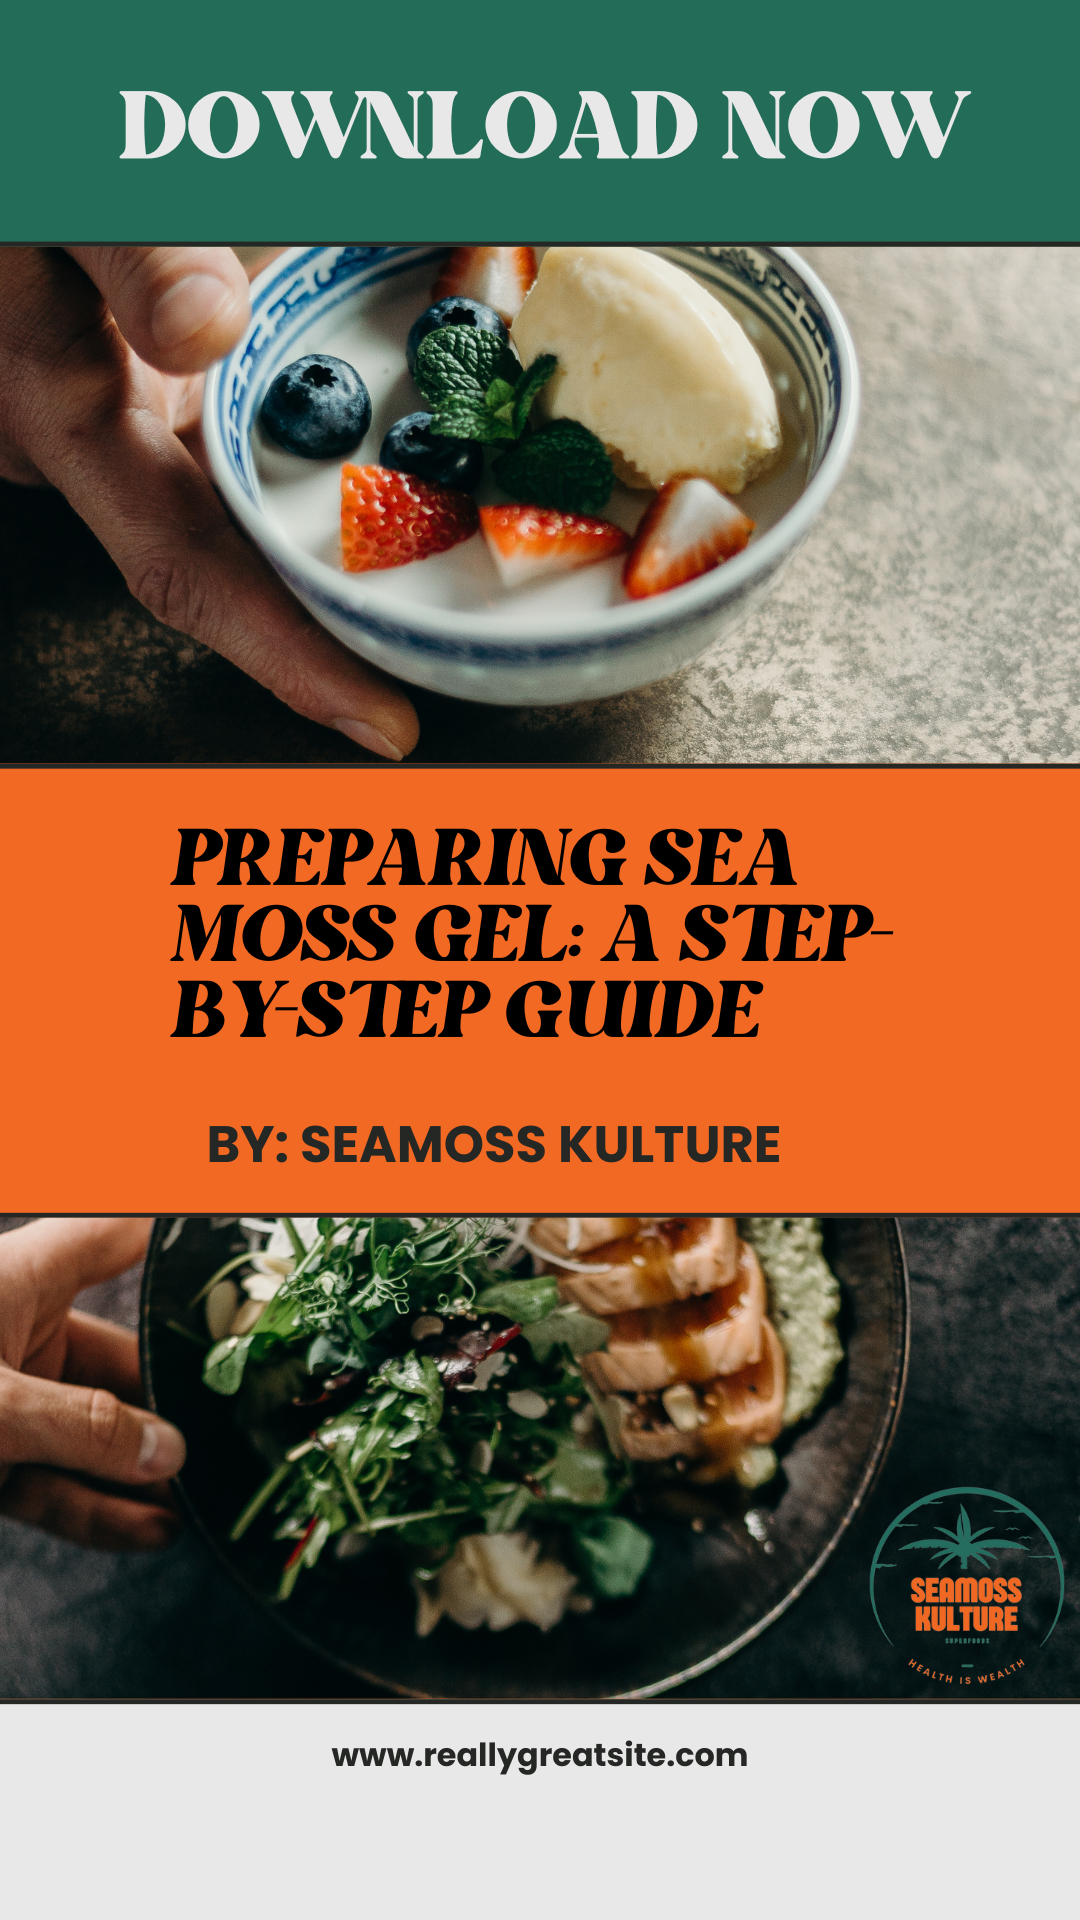 PREPARING SEA MOSS GEL: A STEP-BY-STEP GUIDE